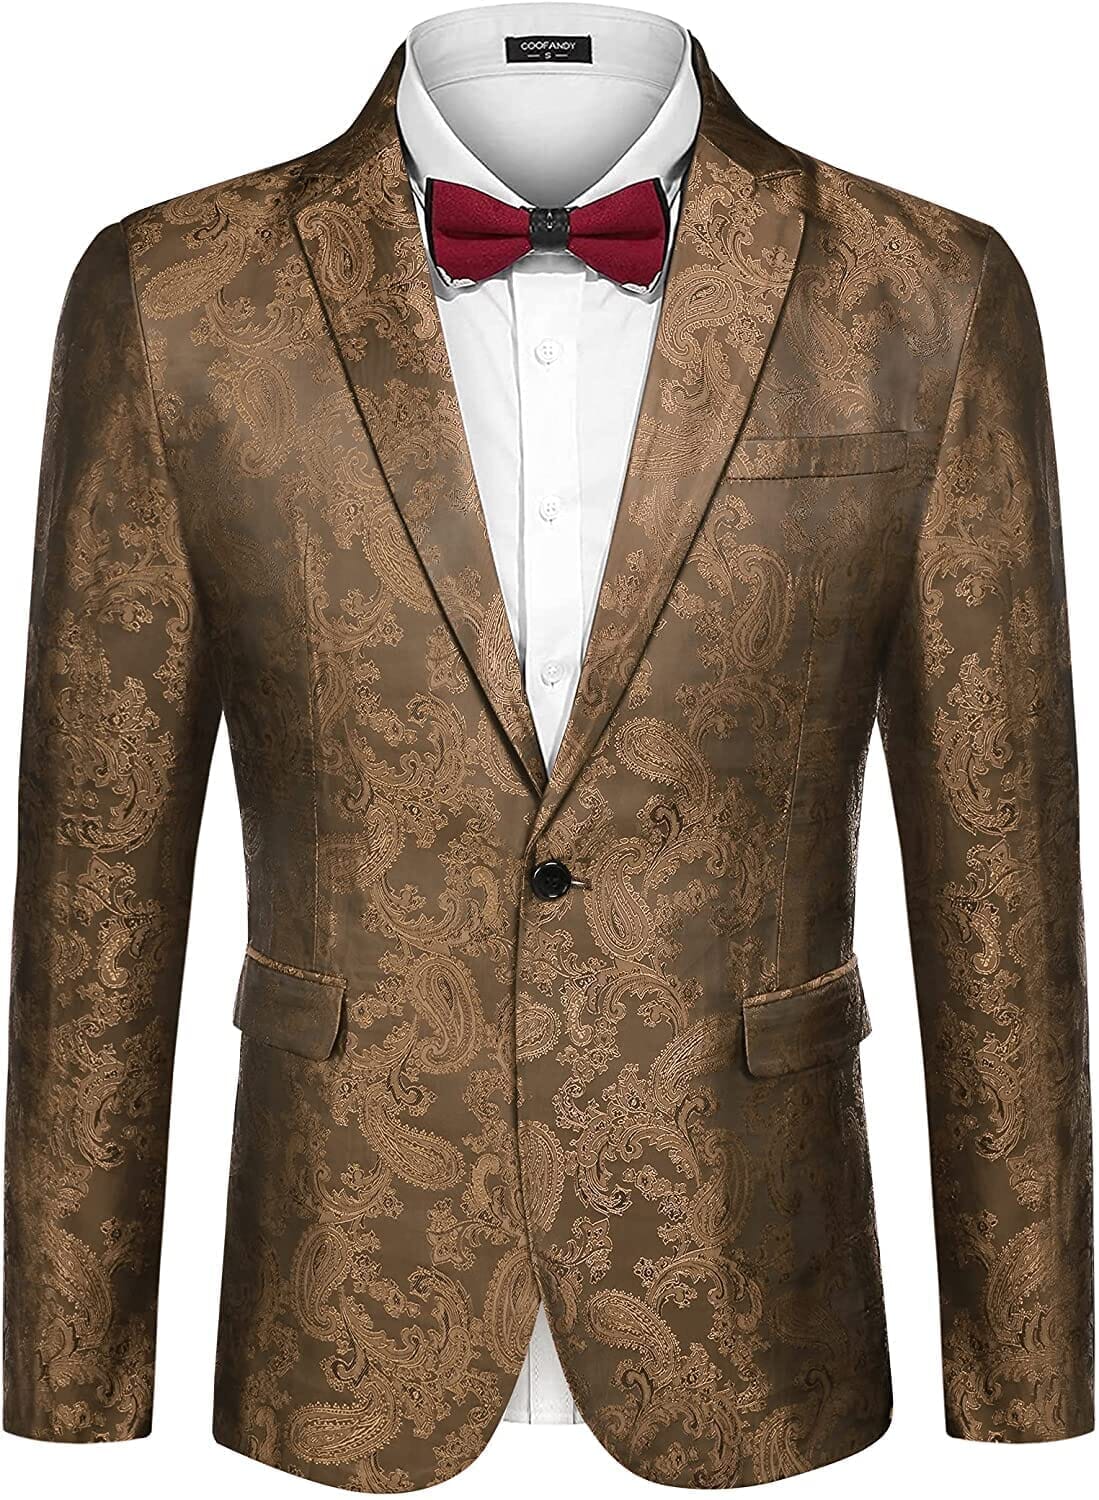 Coofandy Lapel Stylish Suit Jacket (US Only) Blazer coofandy Gold S 